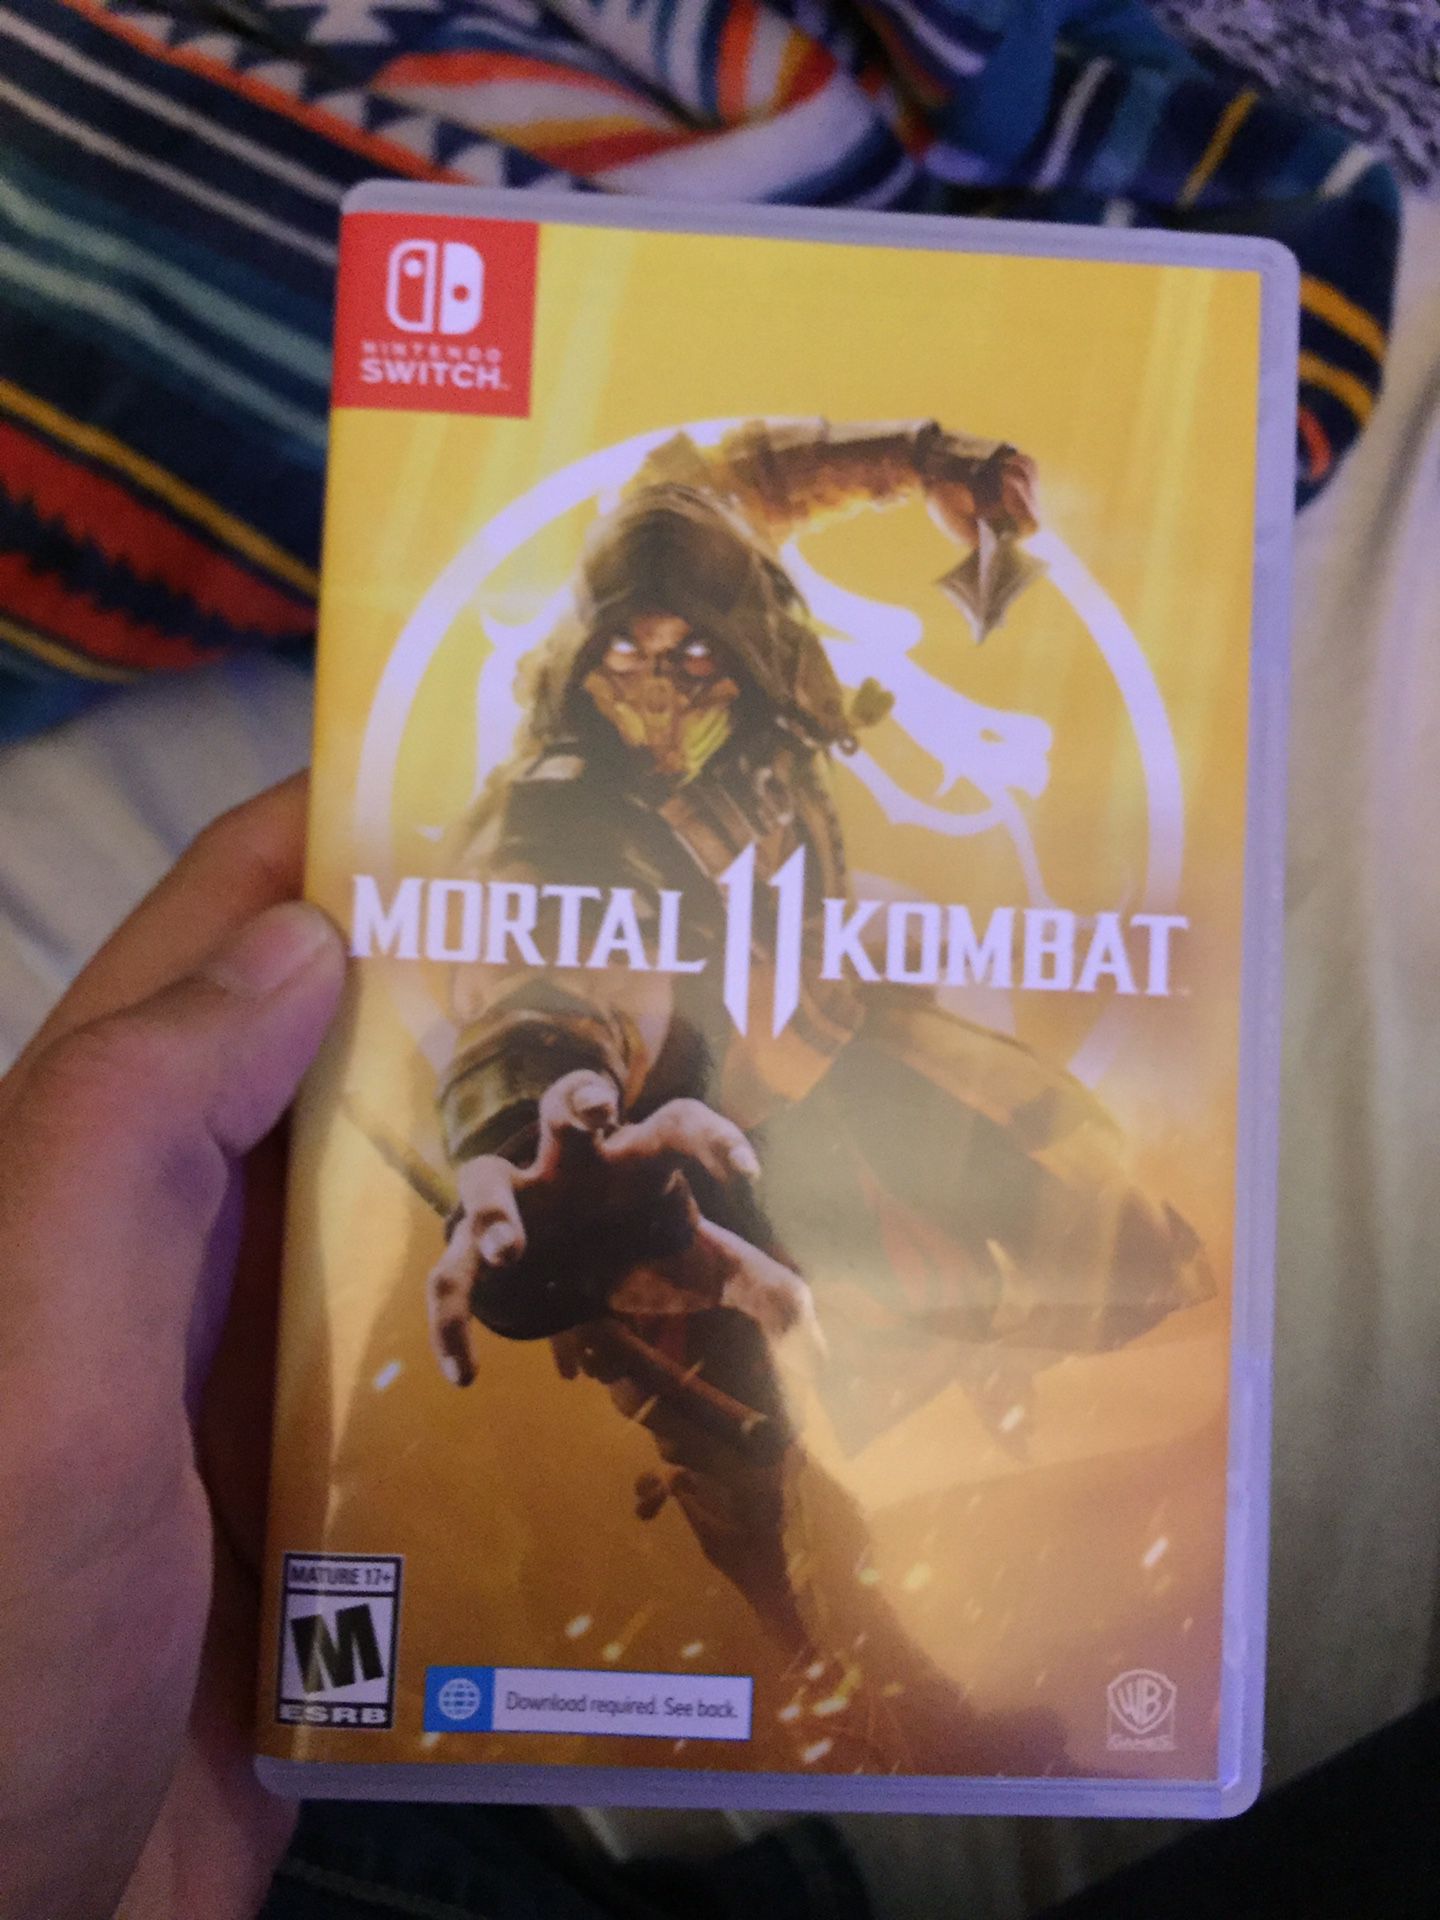 Mortal Kombat 11 nintendo switch